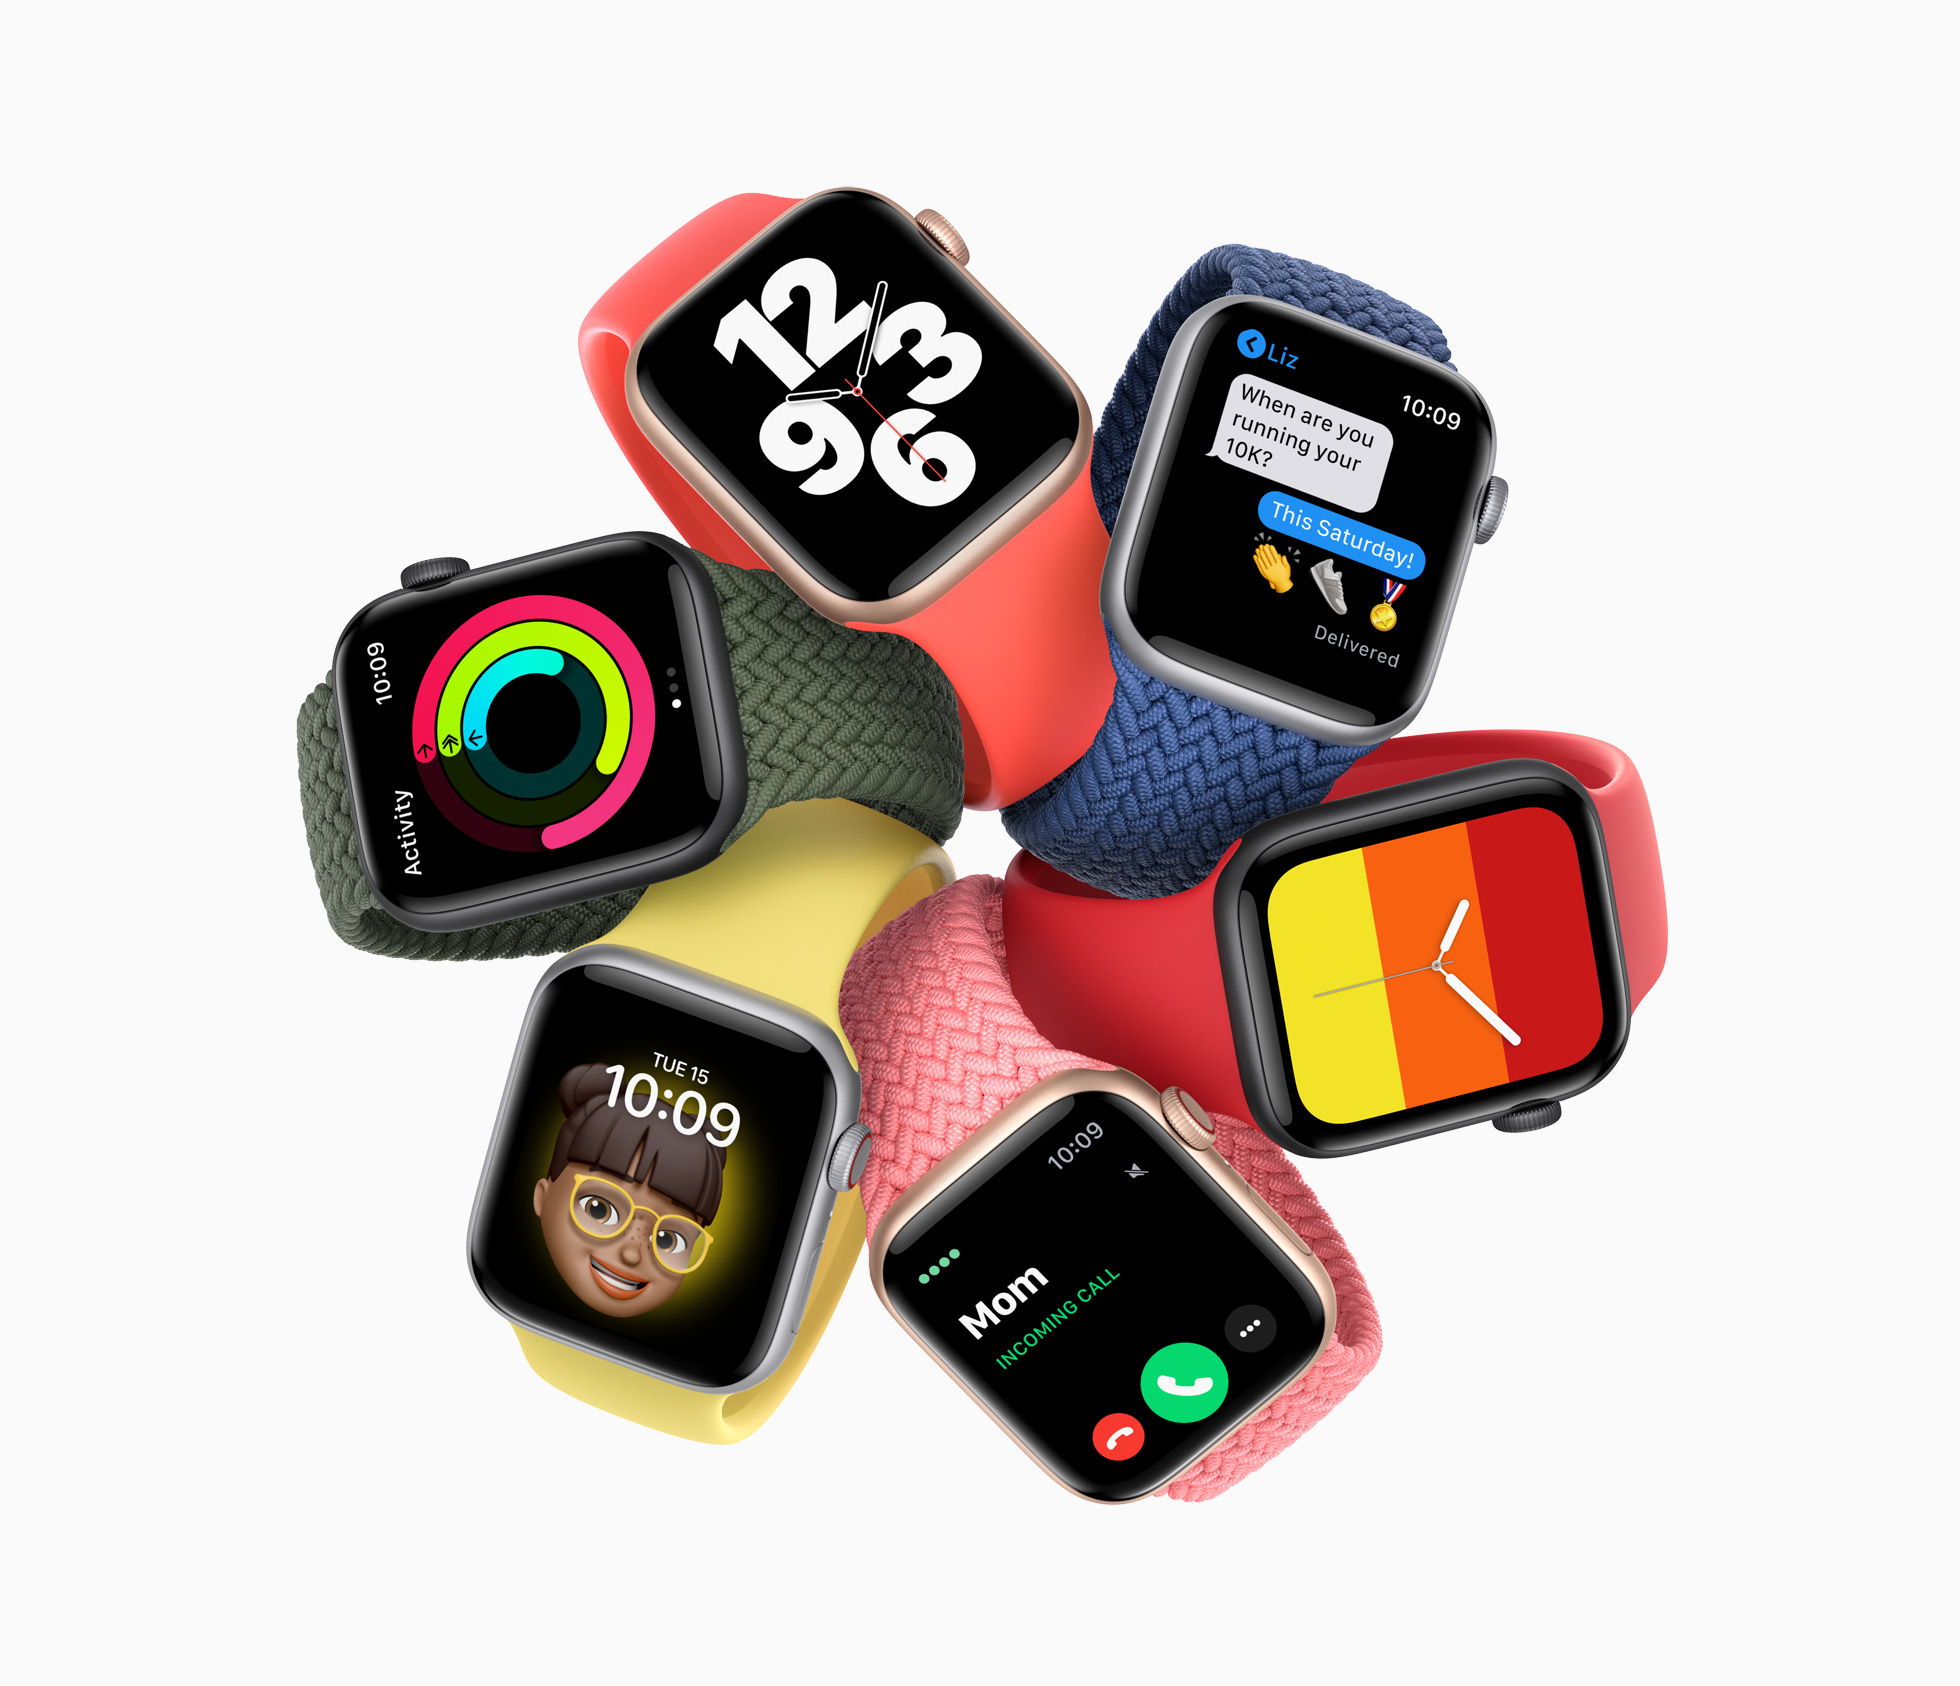 Apple Watch Series 6 contro Apple Watch SE e Apple Watch 5, quale scegliere